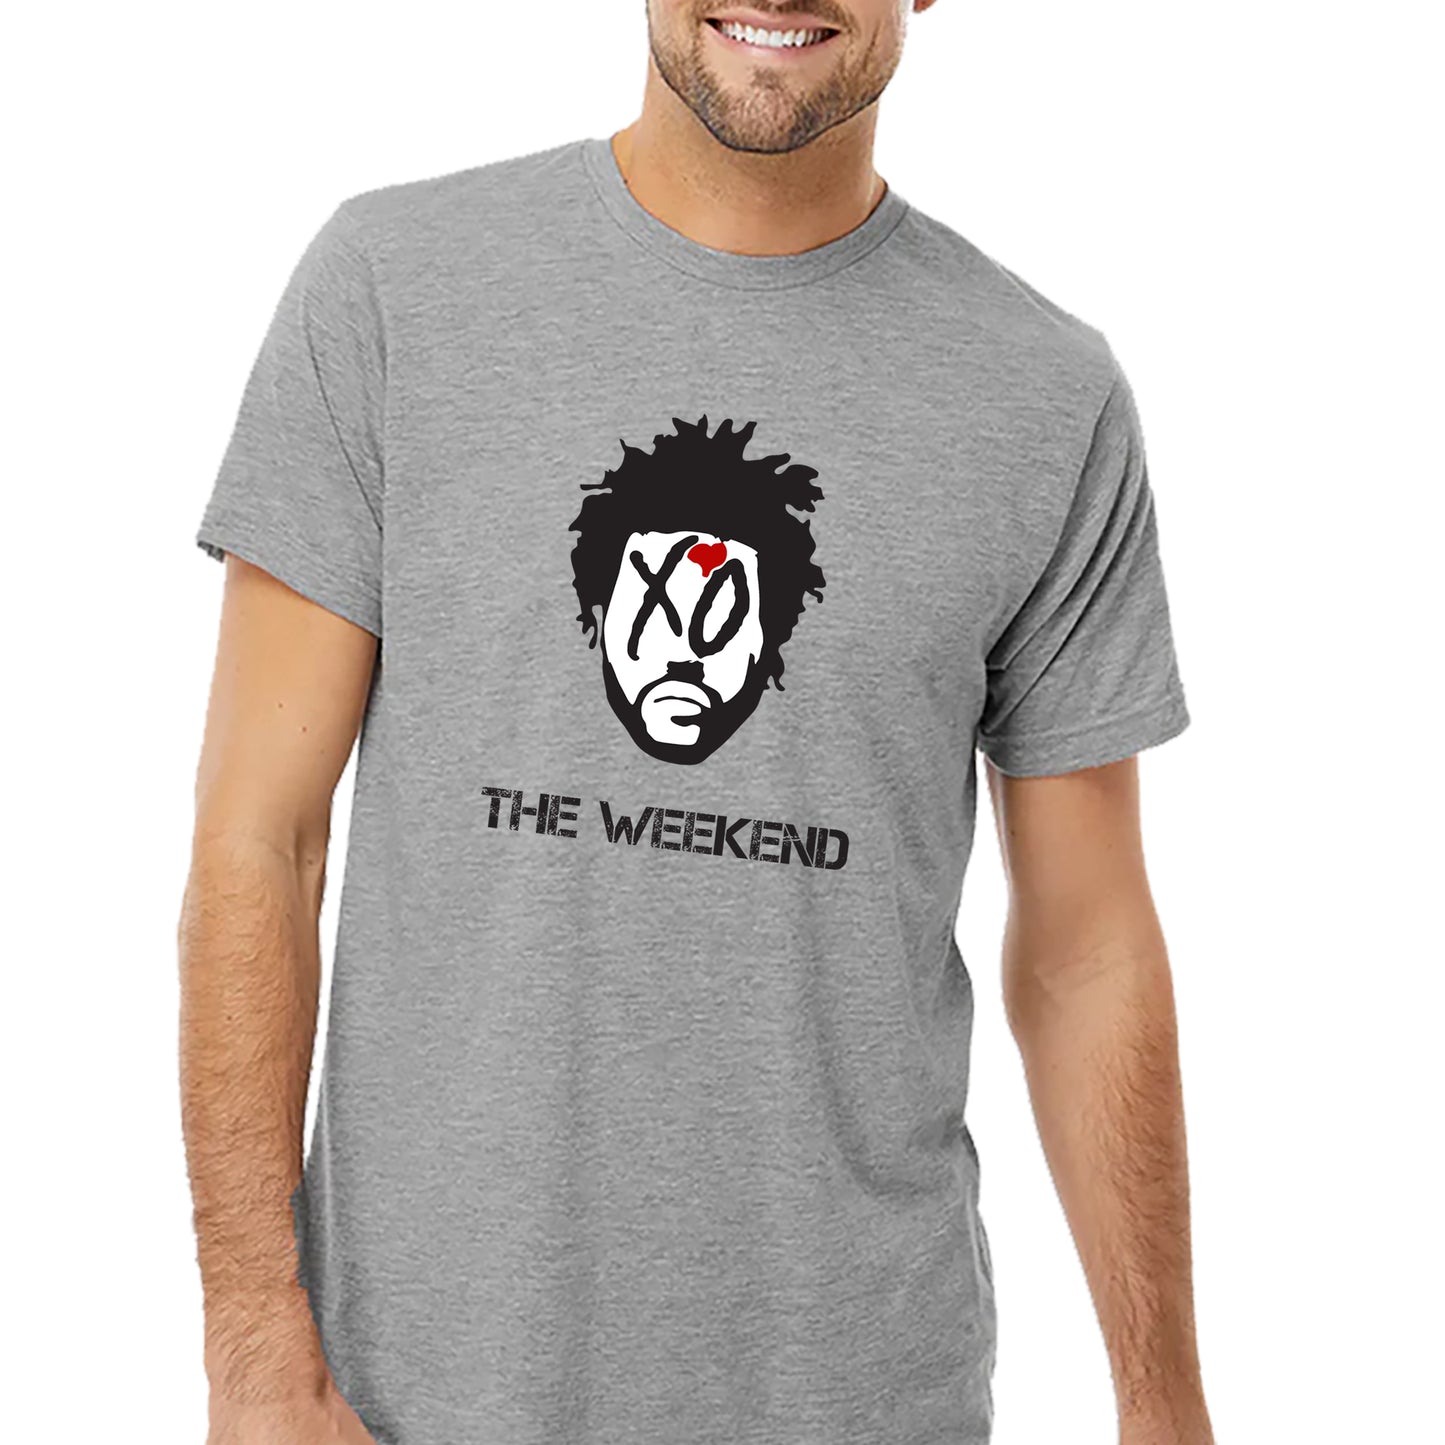 The Weekend T-shirt